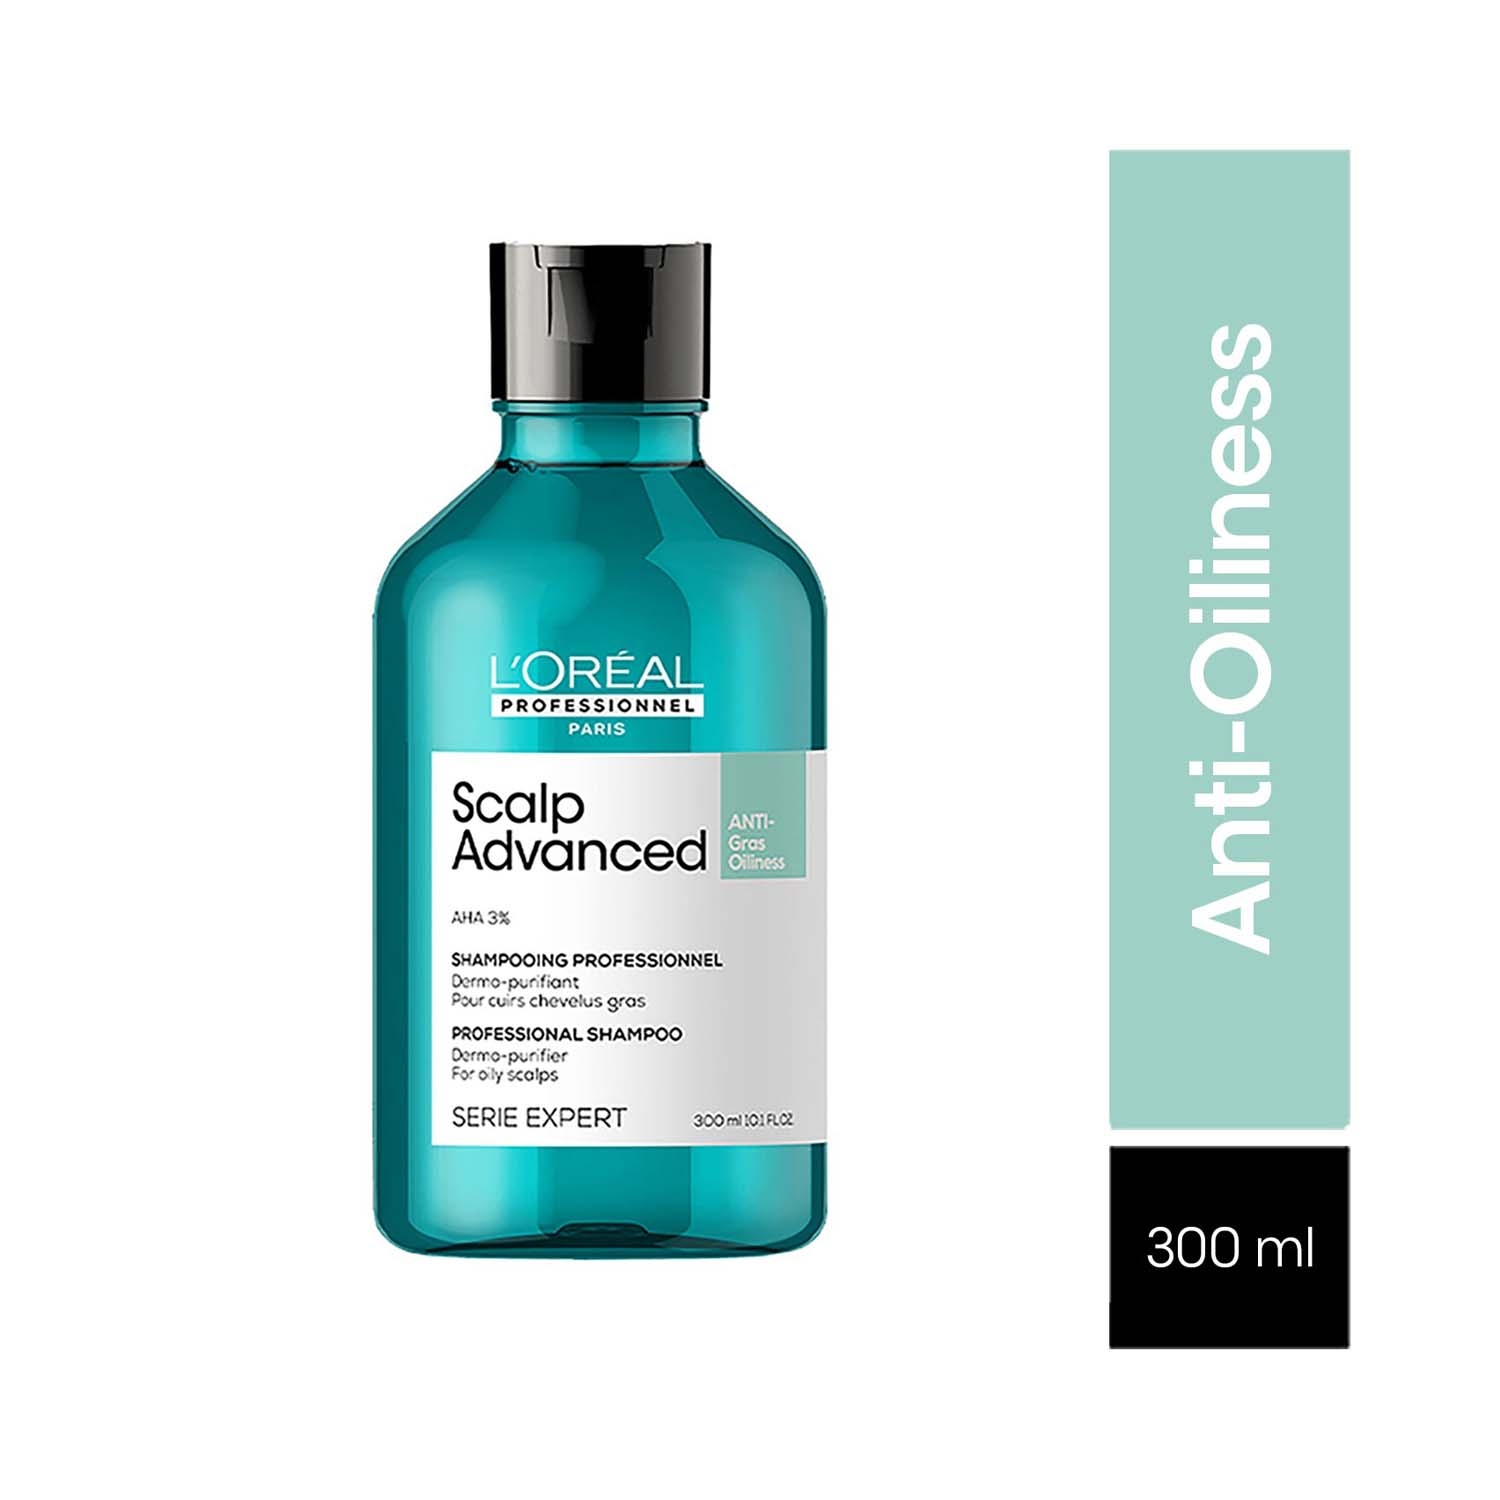 L'Oreal Professionnel | L'Oreal Professionnel Scalp Advanced Anti-Oiliness Dermo-Purifier Shampoo (300ml)